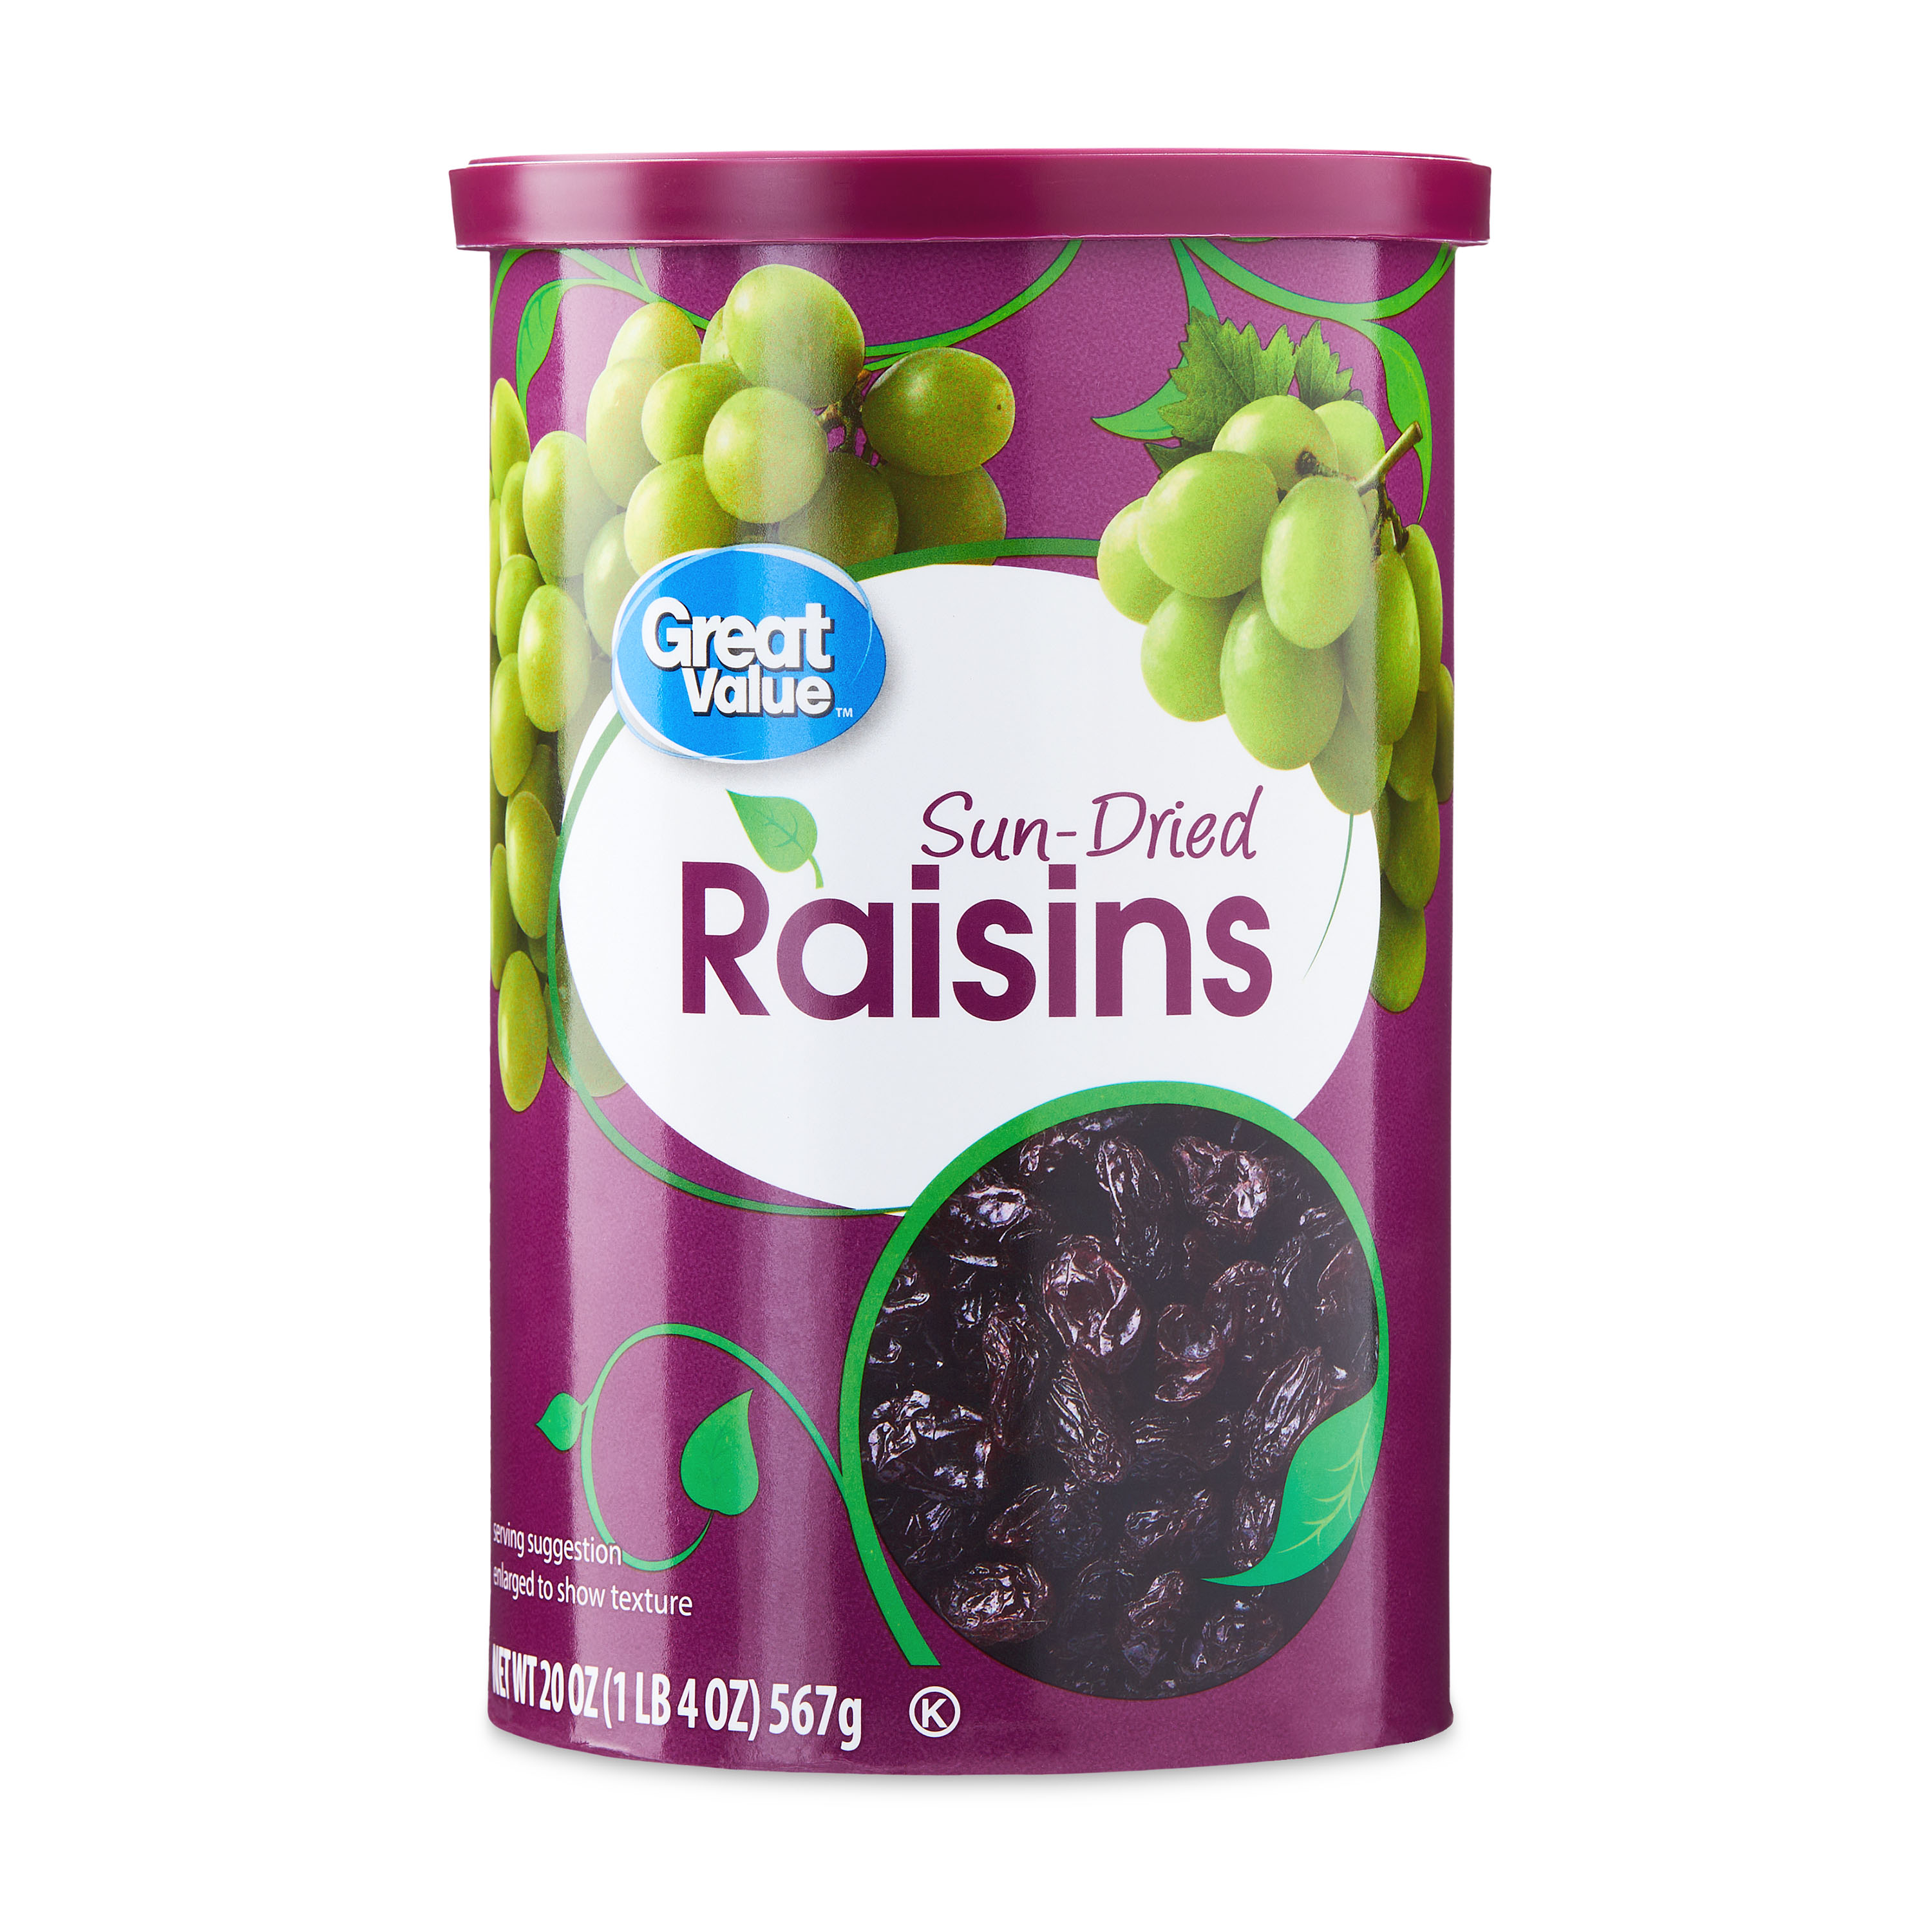 Great Value Sun-Dried Raisins, 20 oz - image 1 of 7